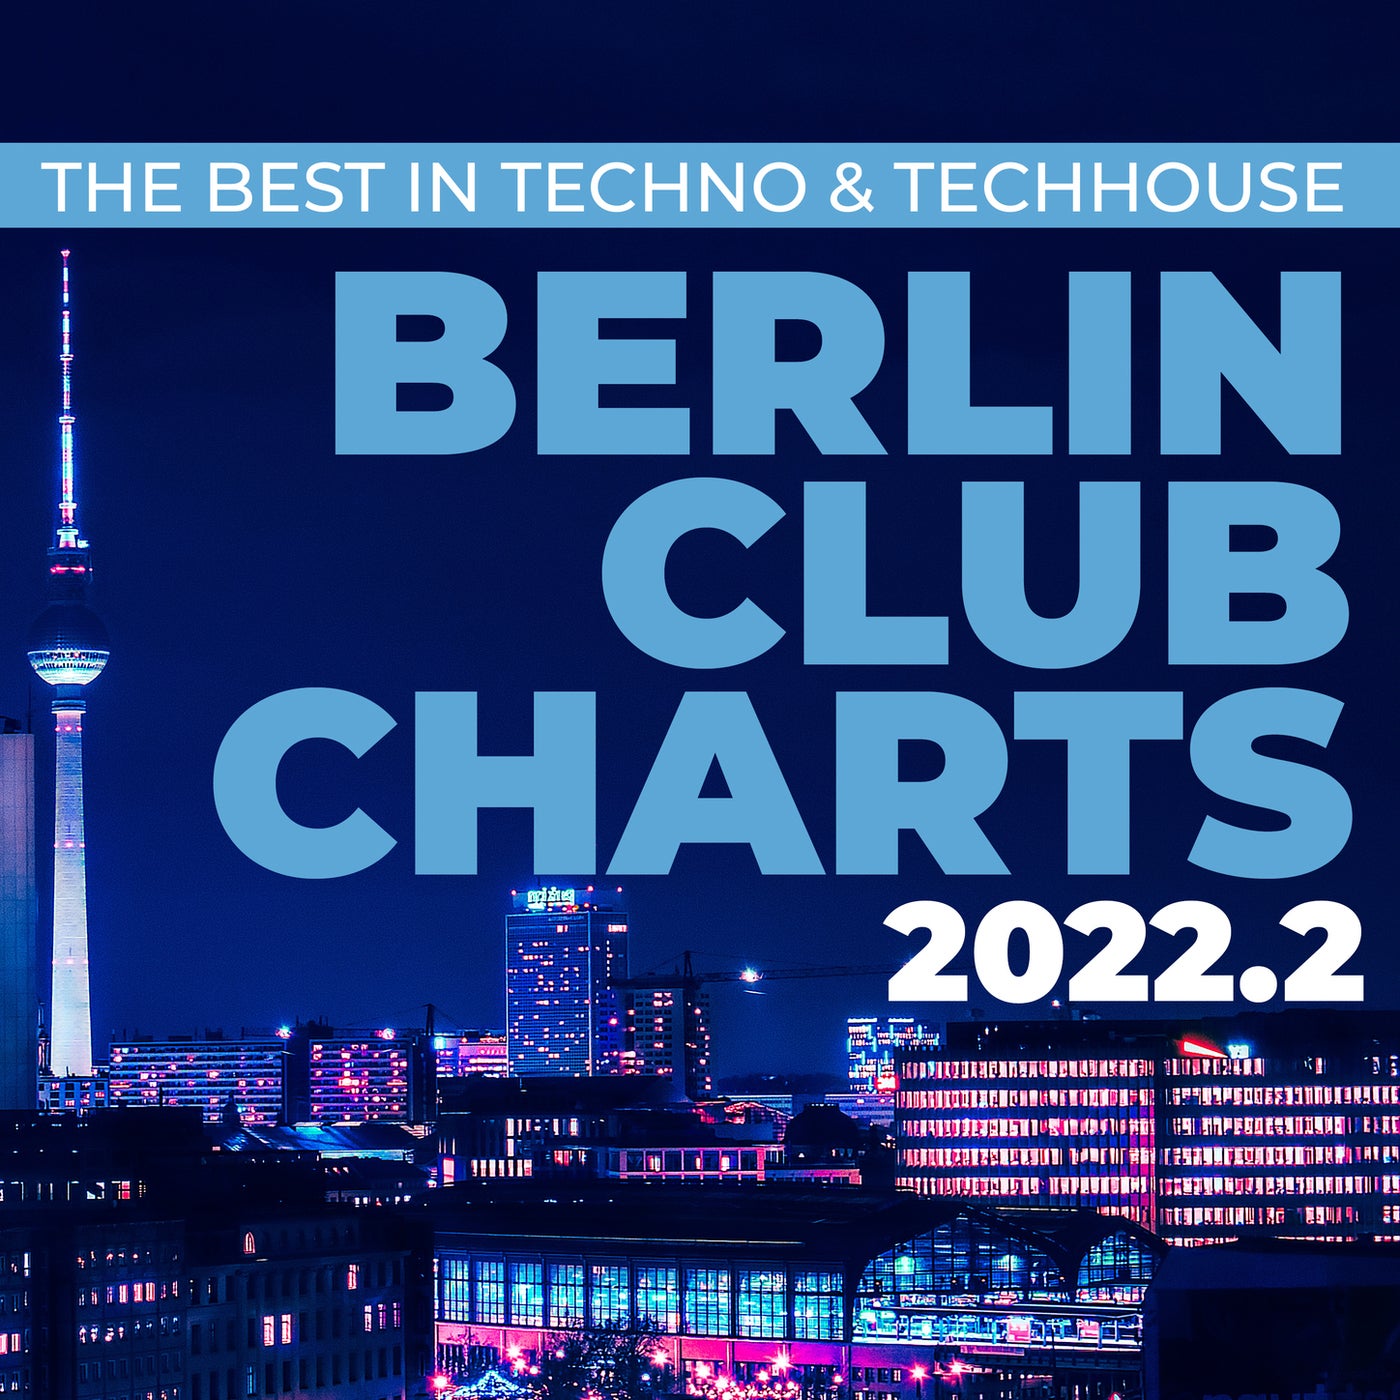 Berlin Club Charts 2022.2 - The best in Techno & Techhouse